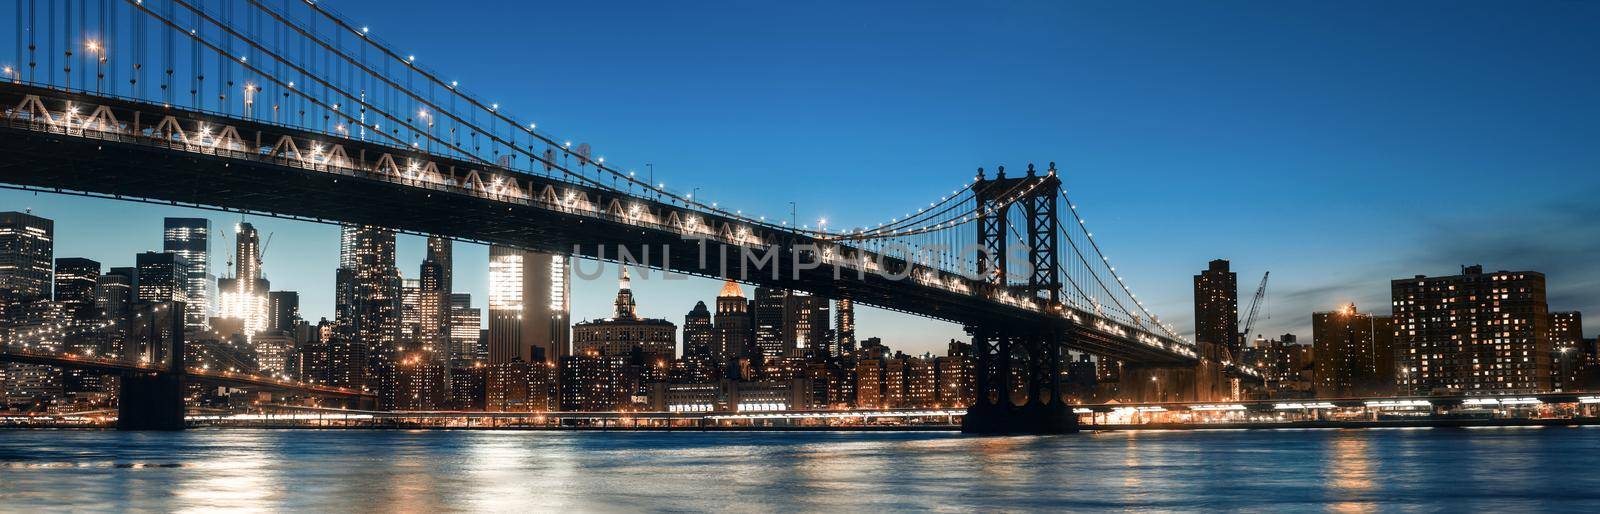 Manhattan Skyline and Manhattan Bridge At Night. Manhattan Bridge is a suspension bridge that crosses the East River in New York City. 